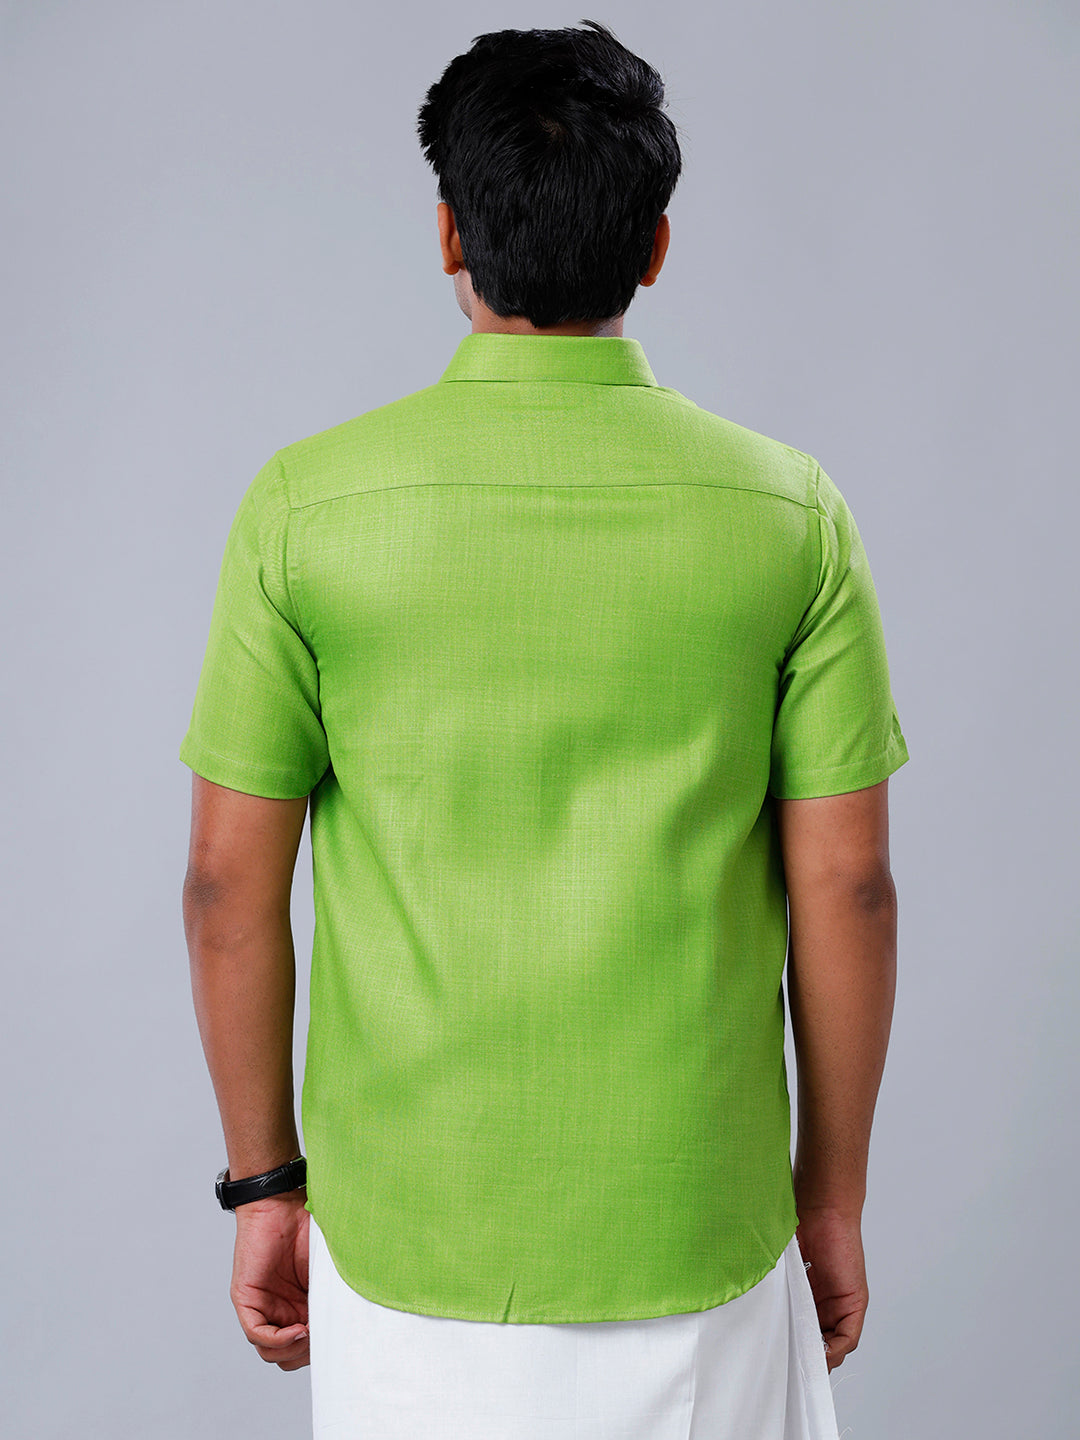 Mens Formal Shirt Half Sleeves Parrot Green T41 TQ8-Back view